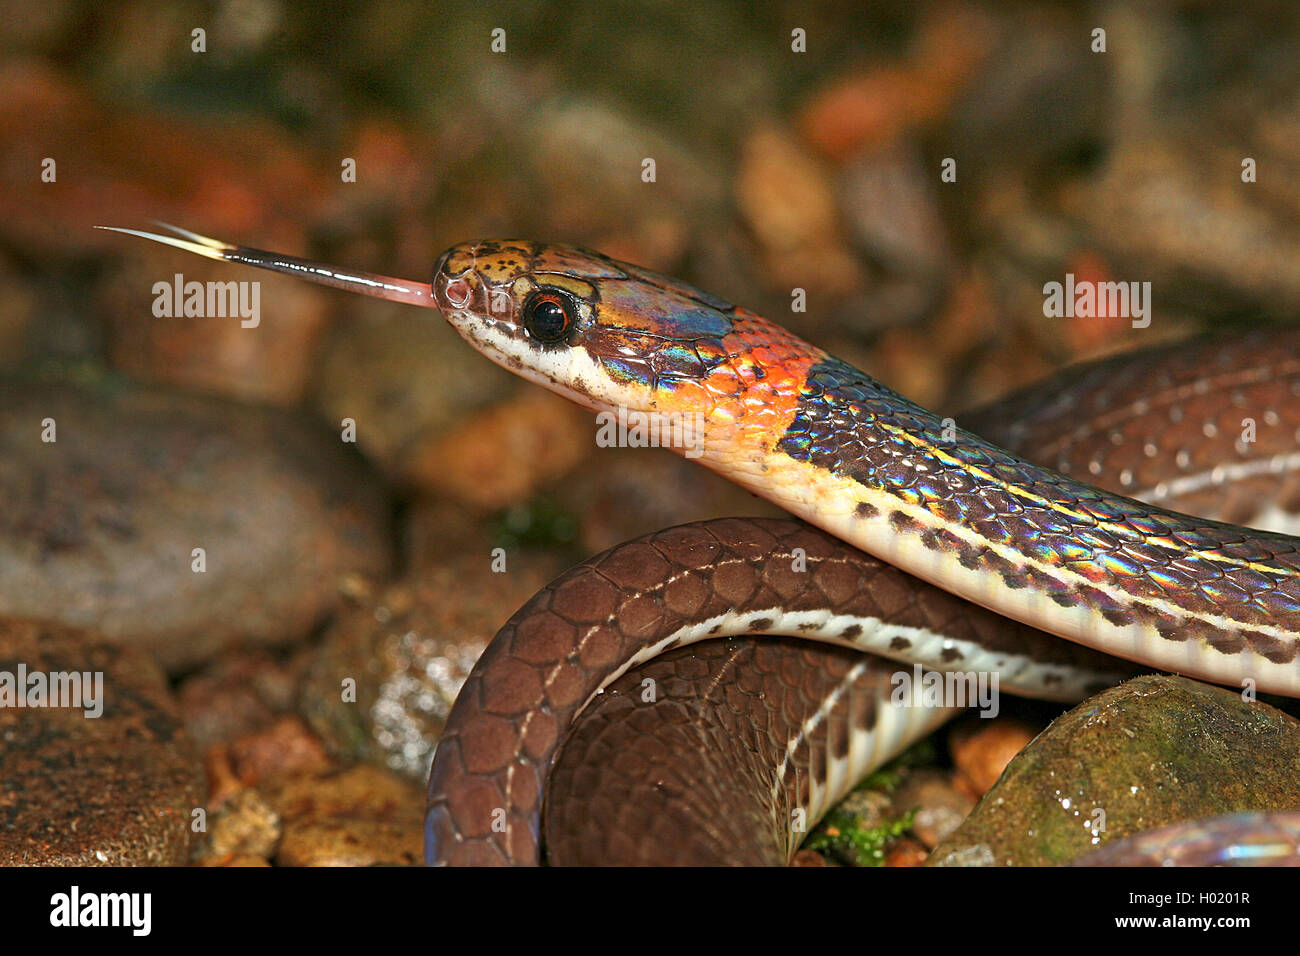 Tropische Natter, Urotheca fulviceps (Urotheca fulviceps), Portraet, zuengelnd, Costa Rica | Tawny-headed Litter Snake  (Urothec Stock Photo